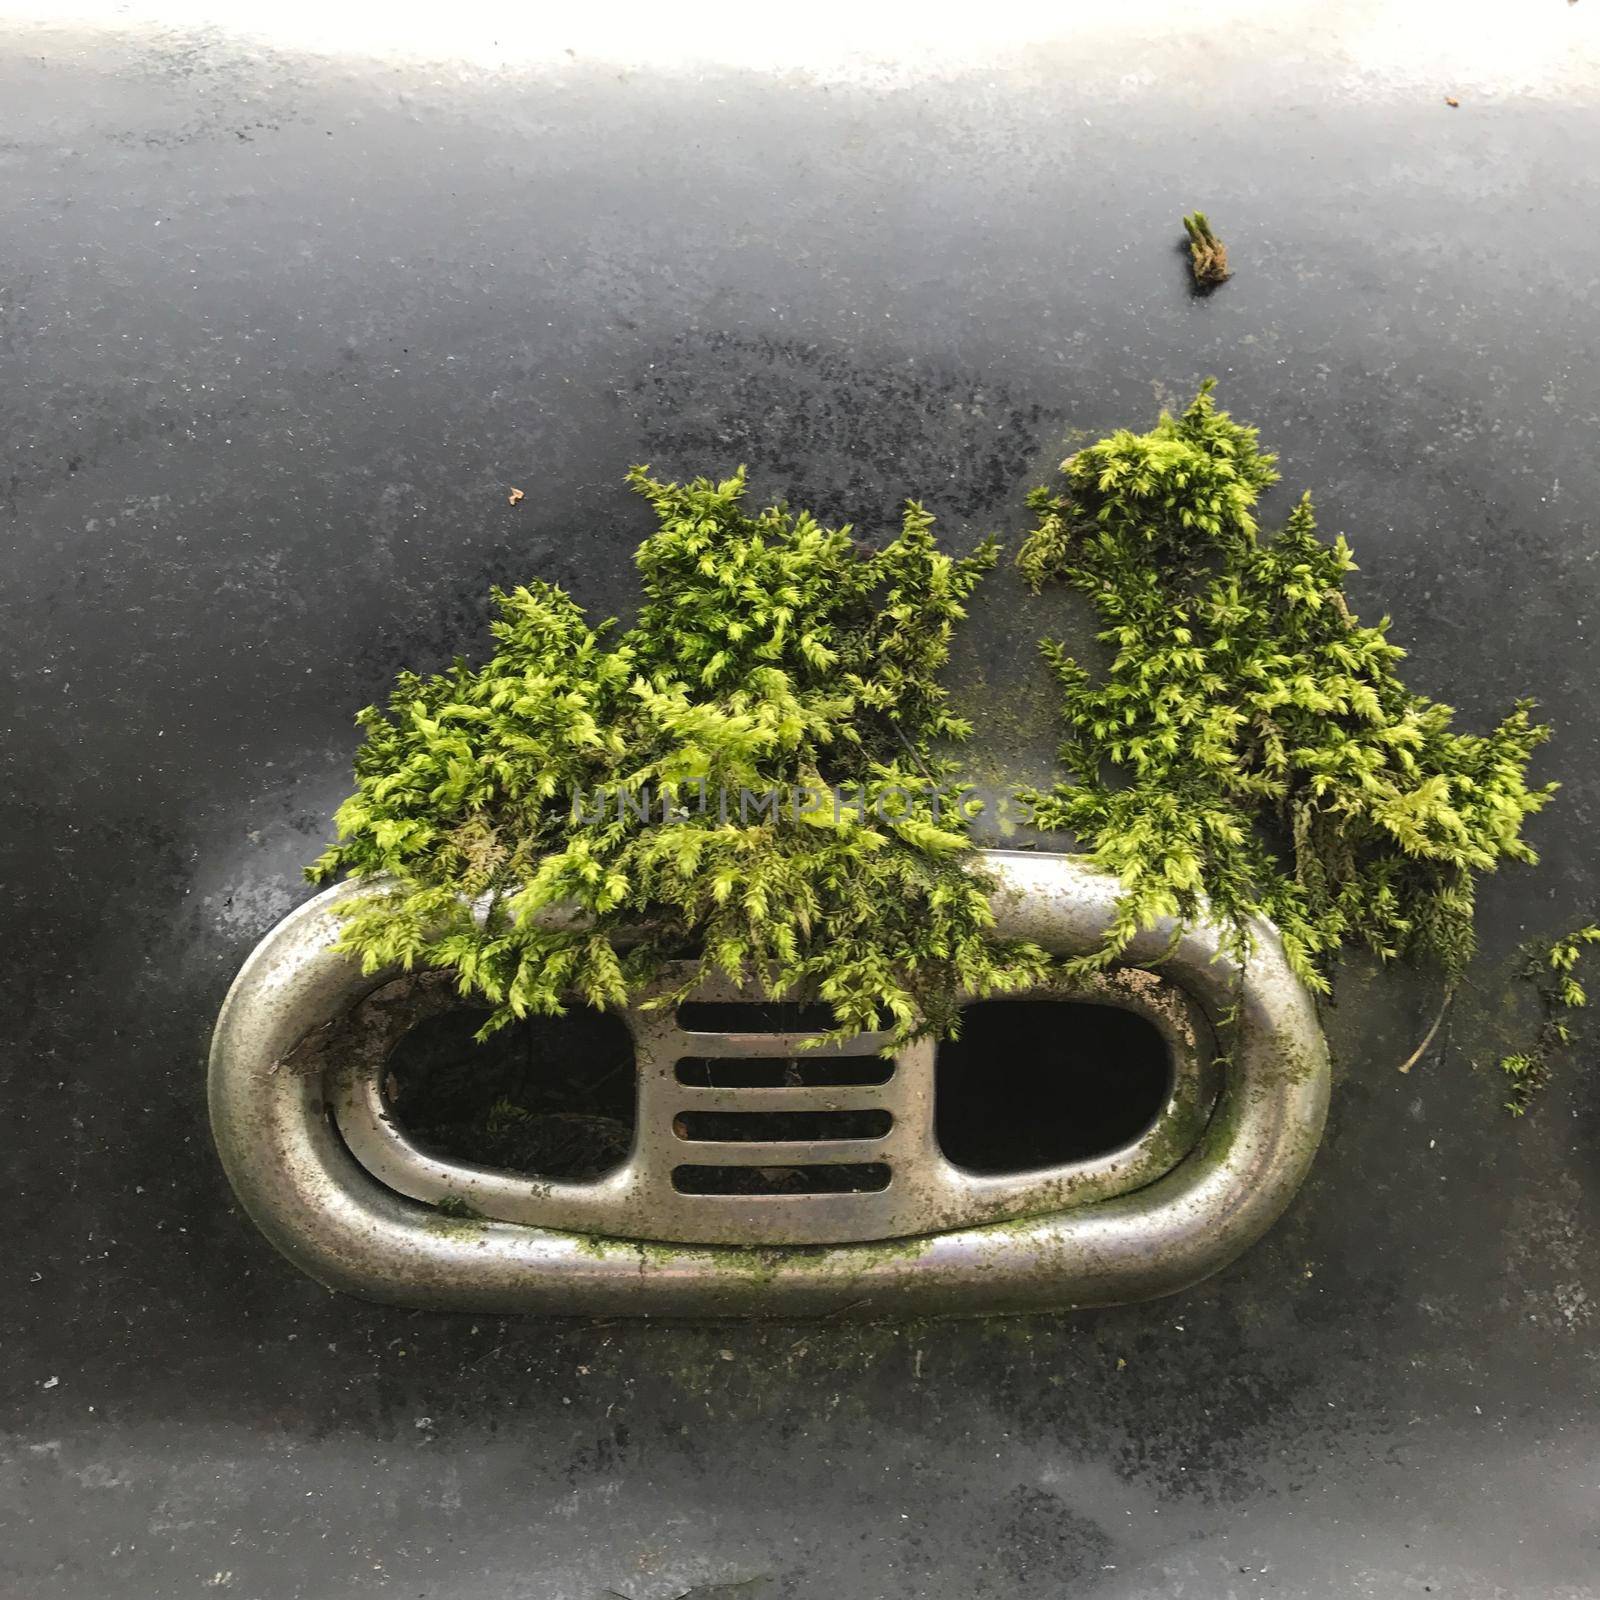 Moss growing on the hood of an black oldtimer by LeoniekvanderVliet